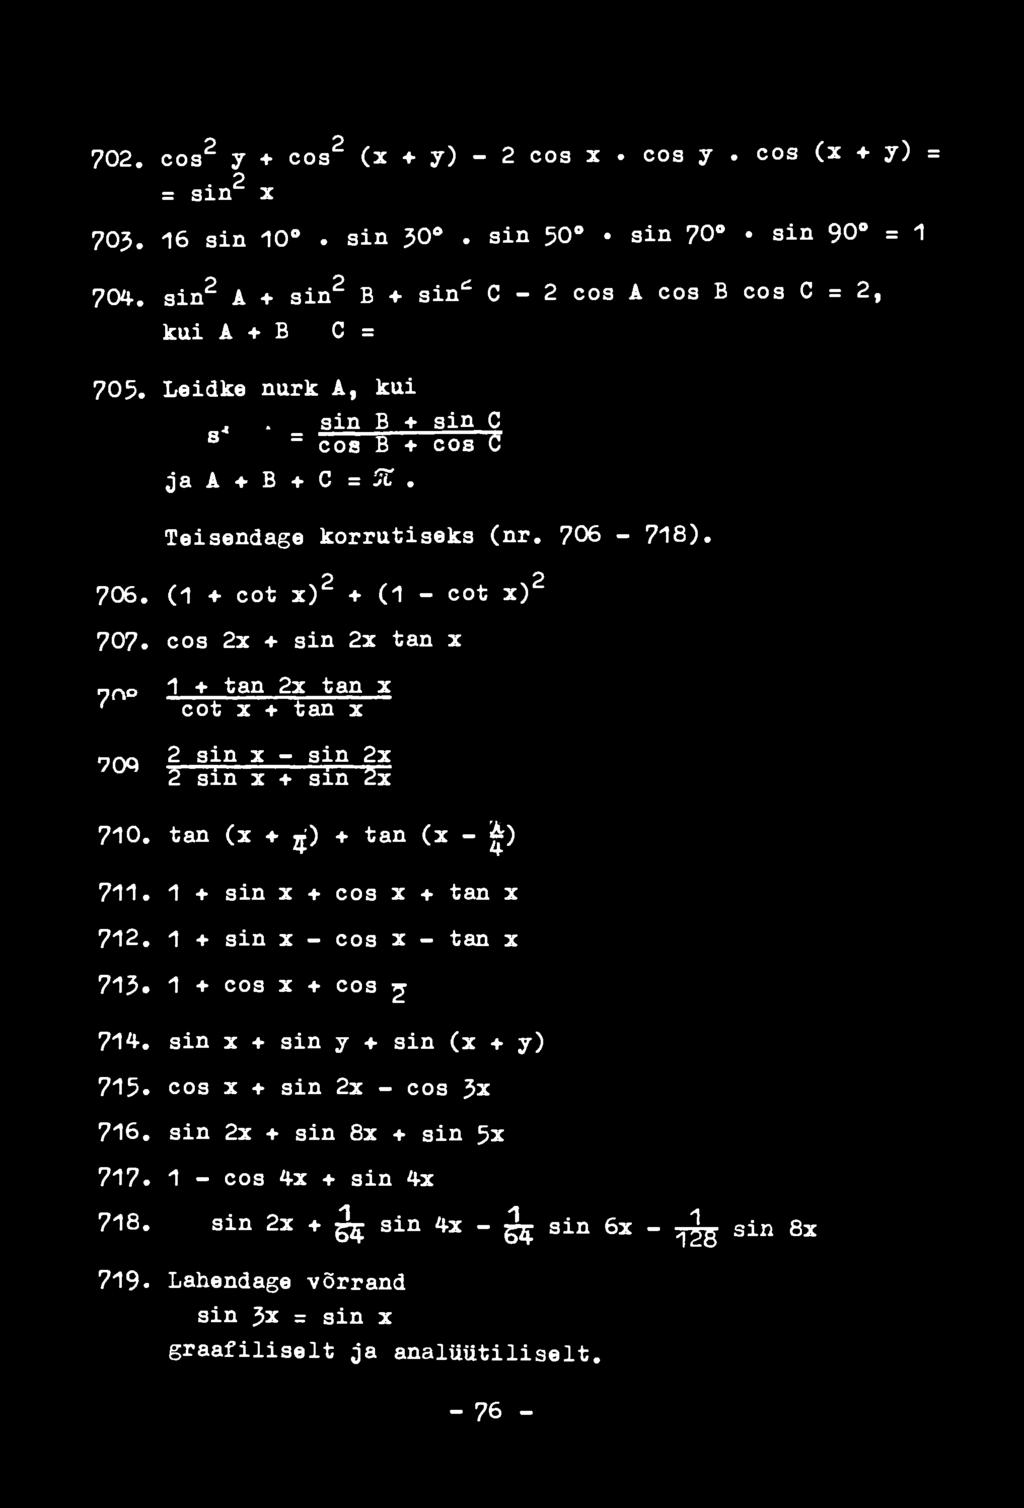 cos 2x + sin 2x tan x ппс, 1 + tan 2x tan x ' cot x + tan x 70Q 2 sin x - sin 2x 2 sin x + sin 2x 710. tan (x > ц) + tan (x - ) 711. 1 + sin x + cos x + tan x 712.